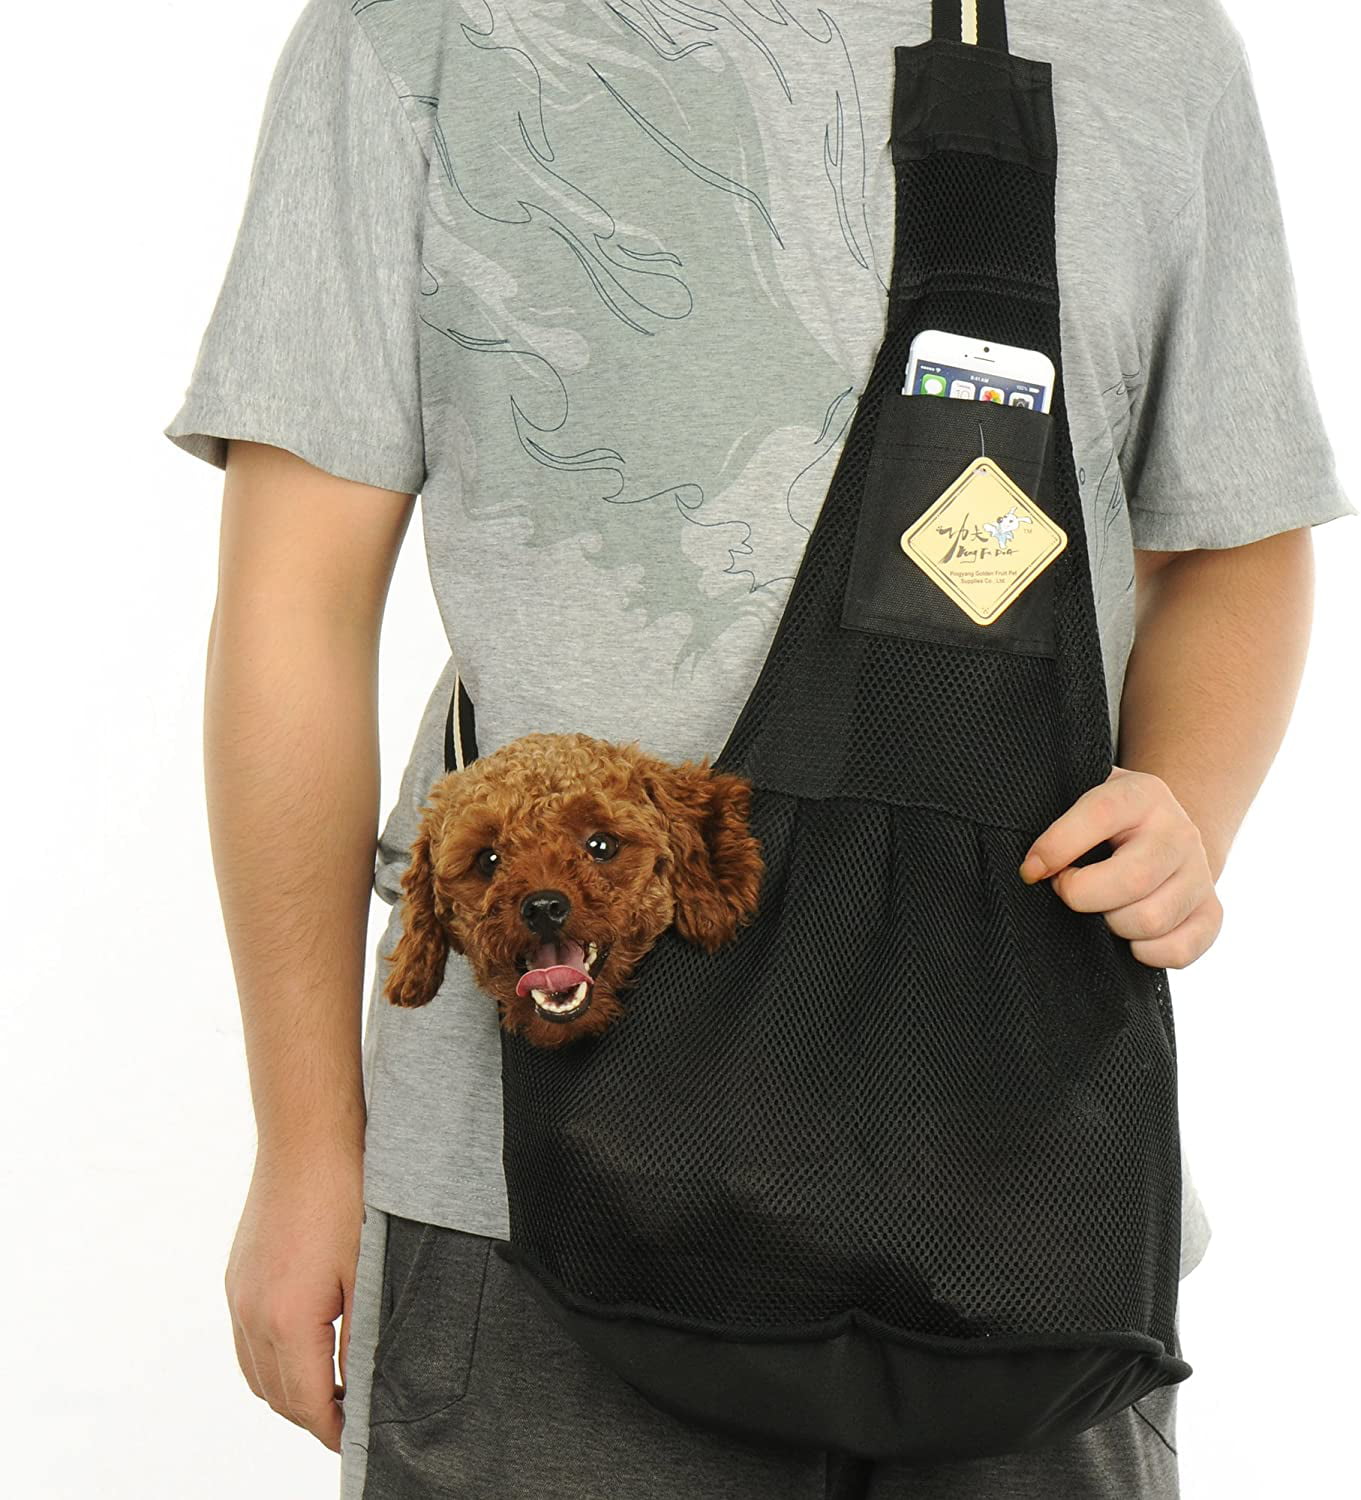 kiwitatá Small Dog Pet Cat Sling Carrier Bag Adjustable Single Shoulder Bag Nylon Cloth Outdoor Pet Carriers Dog Kittens Puppy Carrier Travel Backpack 